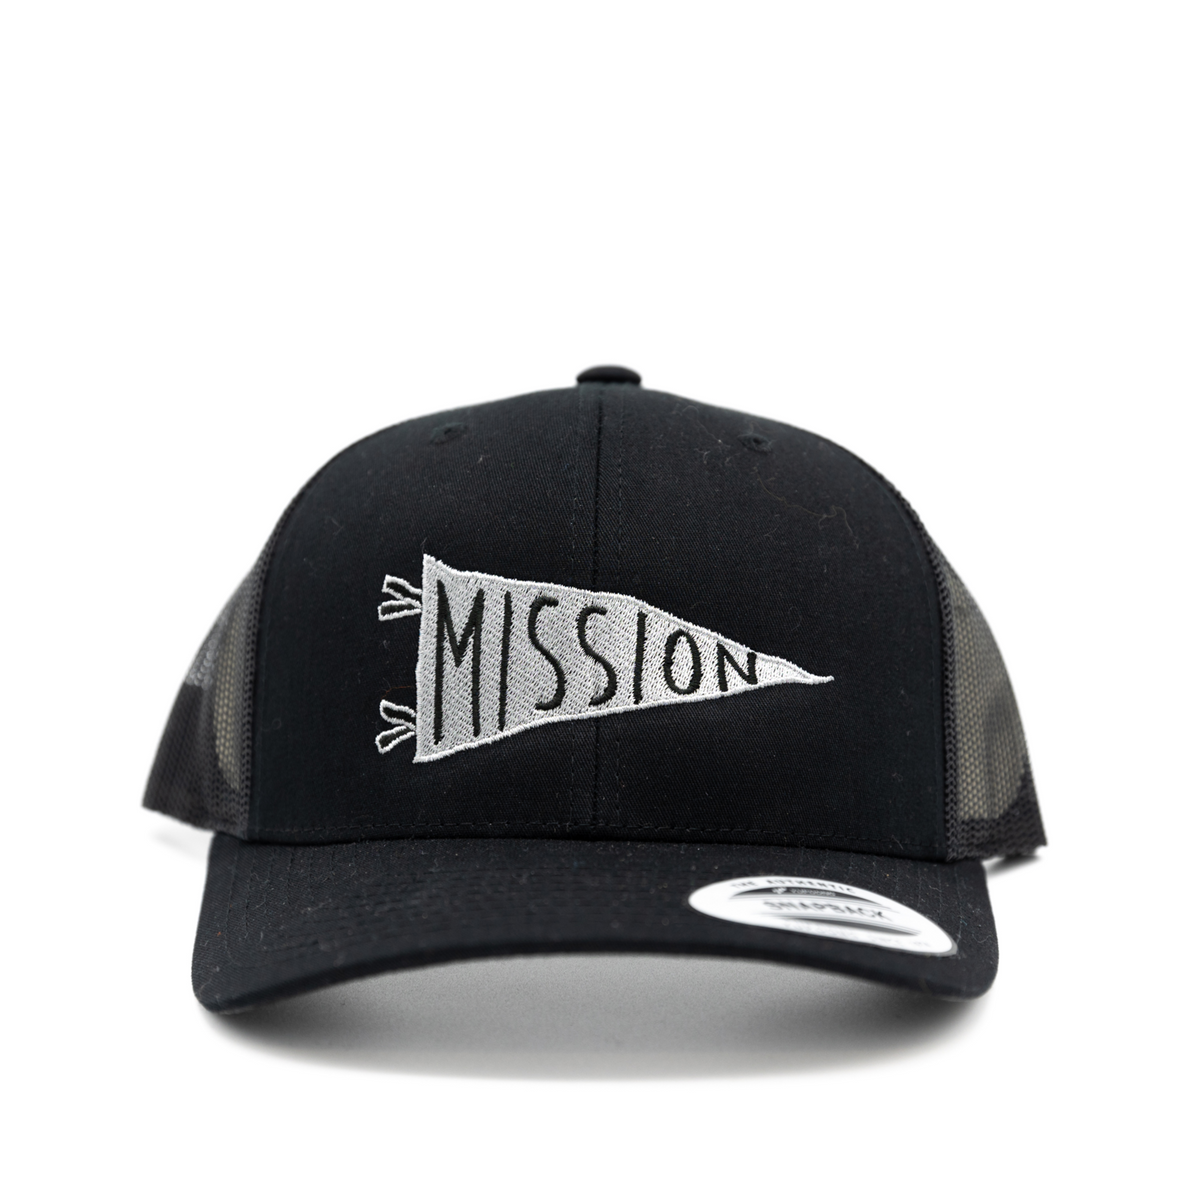 Mission Adult Retro Trucker Cap– Pressland General